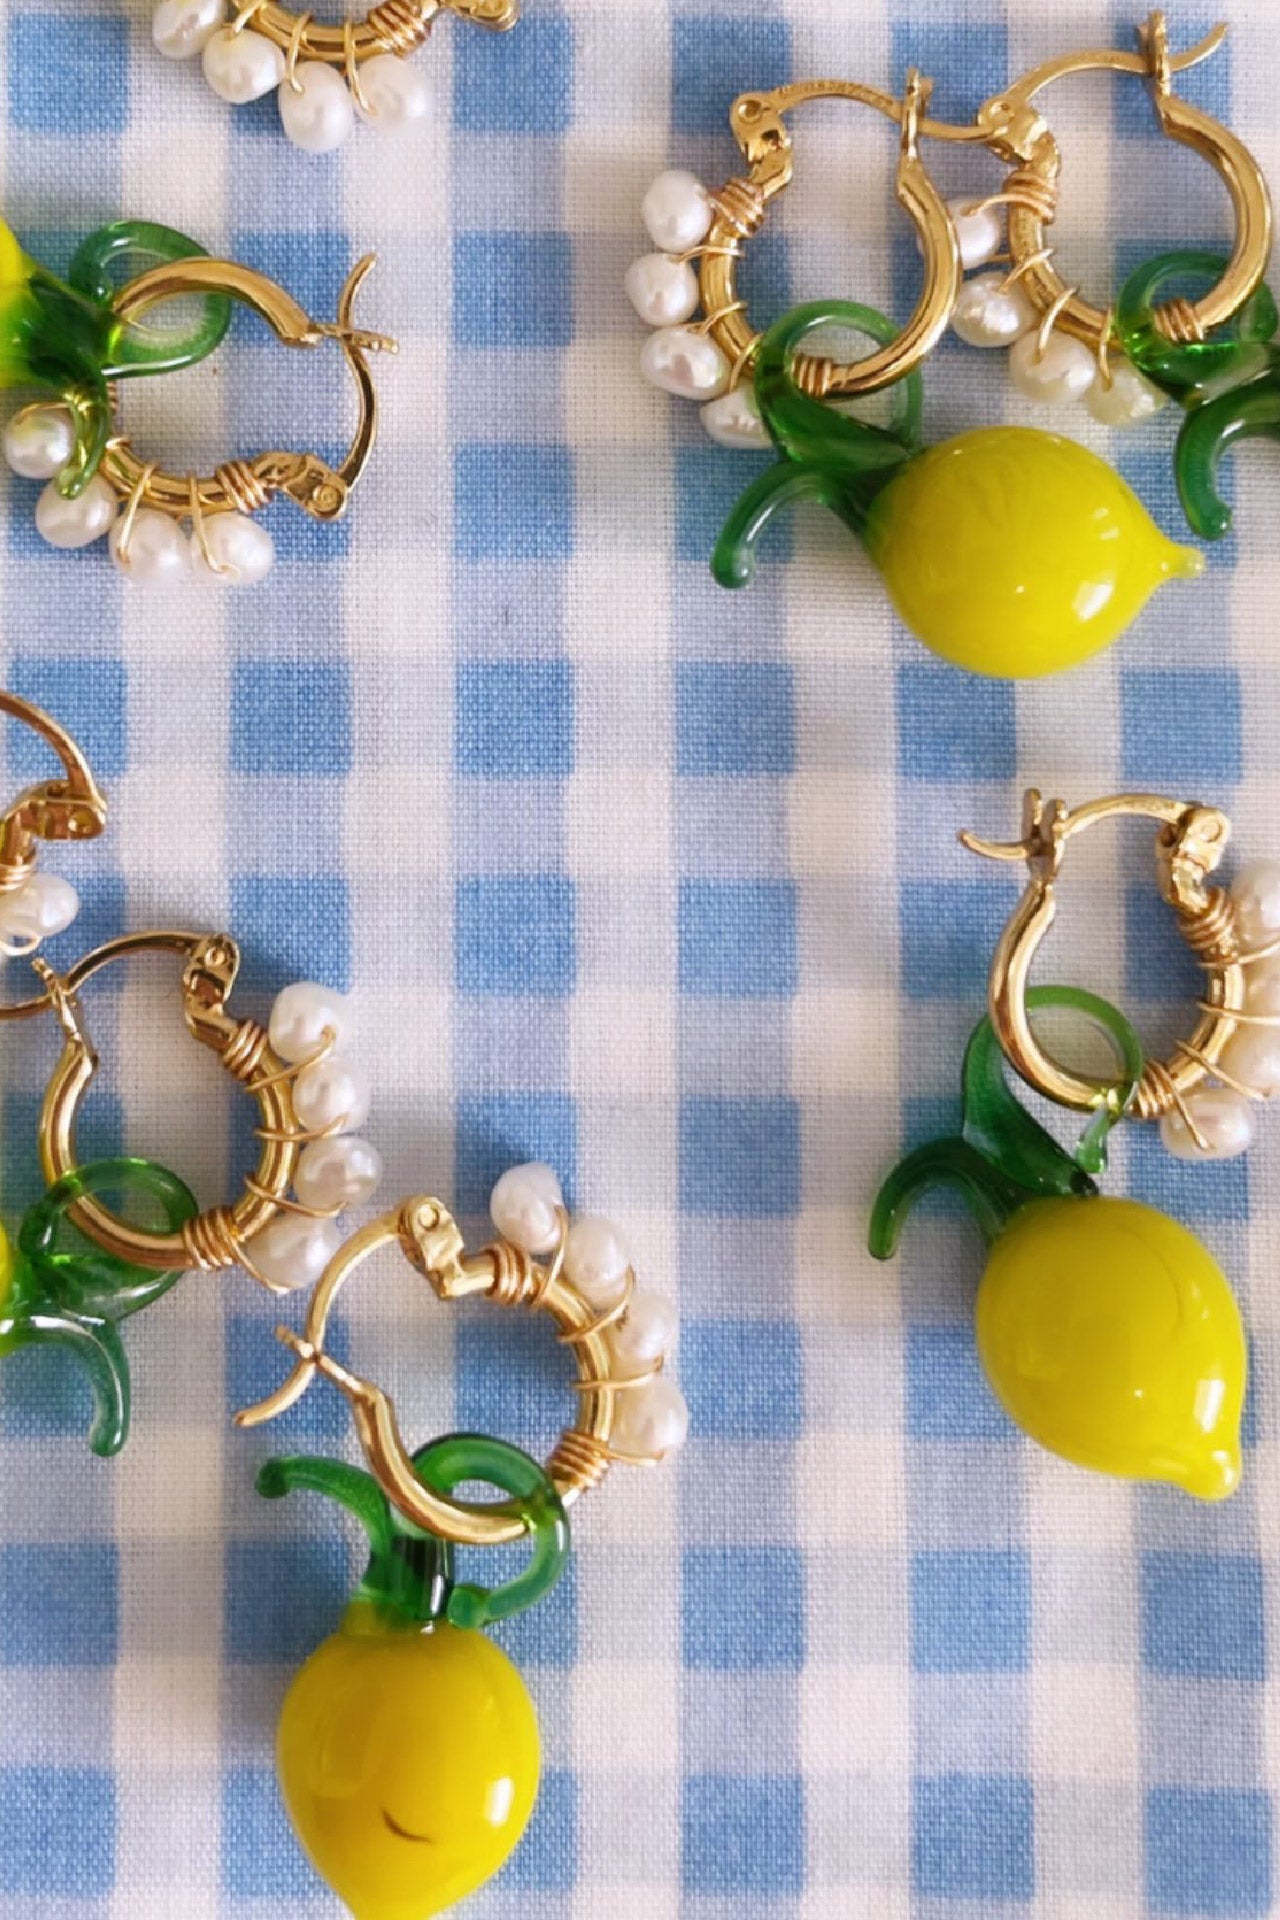 Lemons and pearls